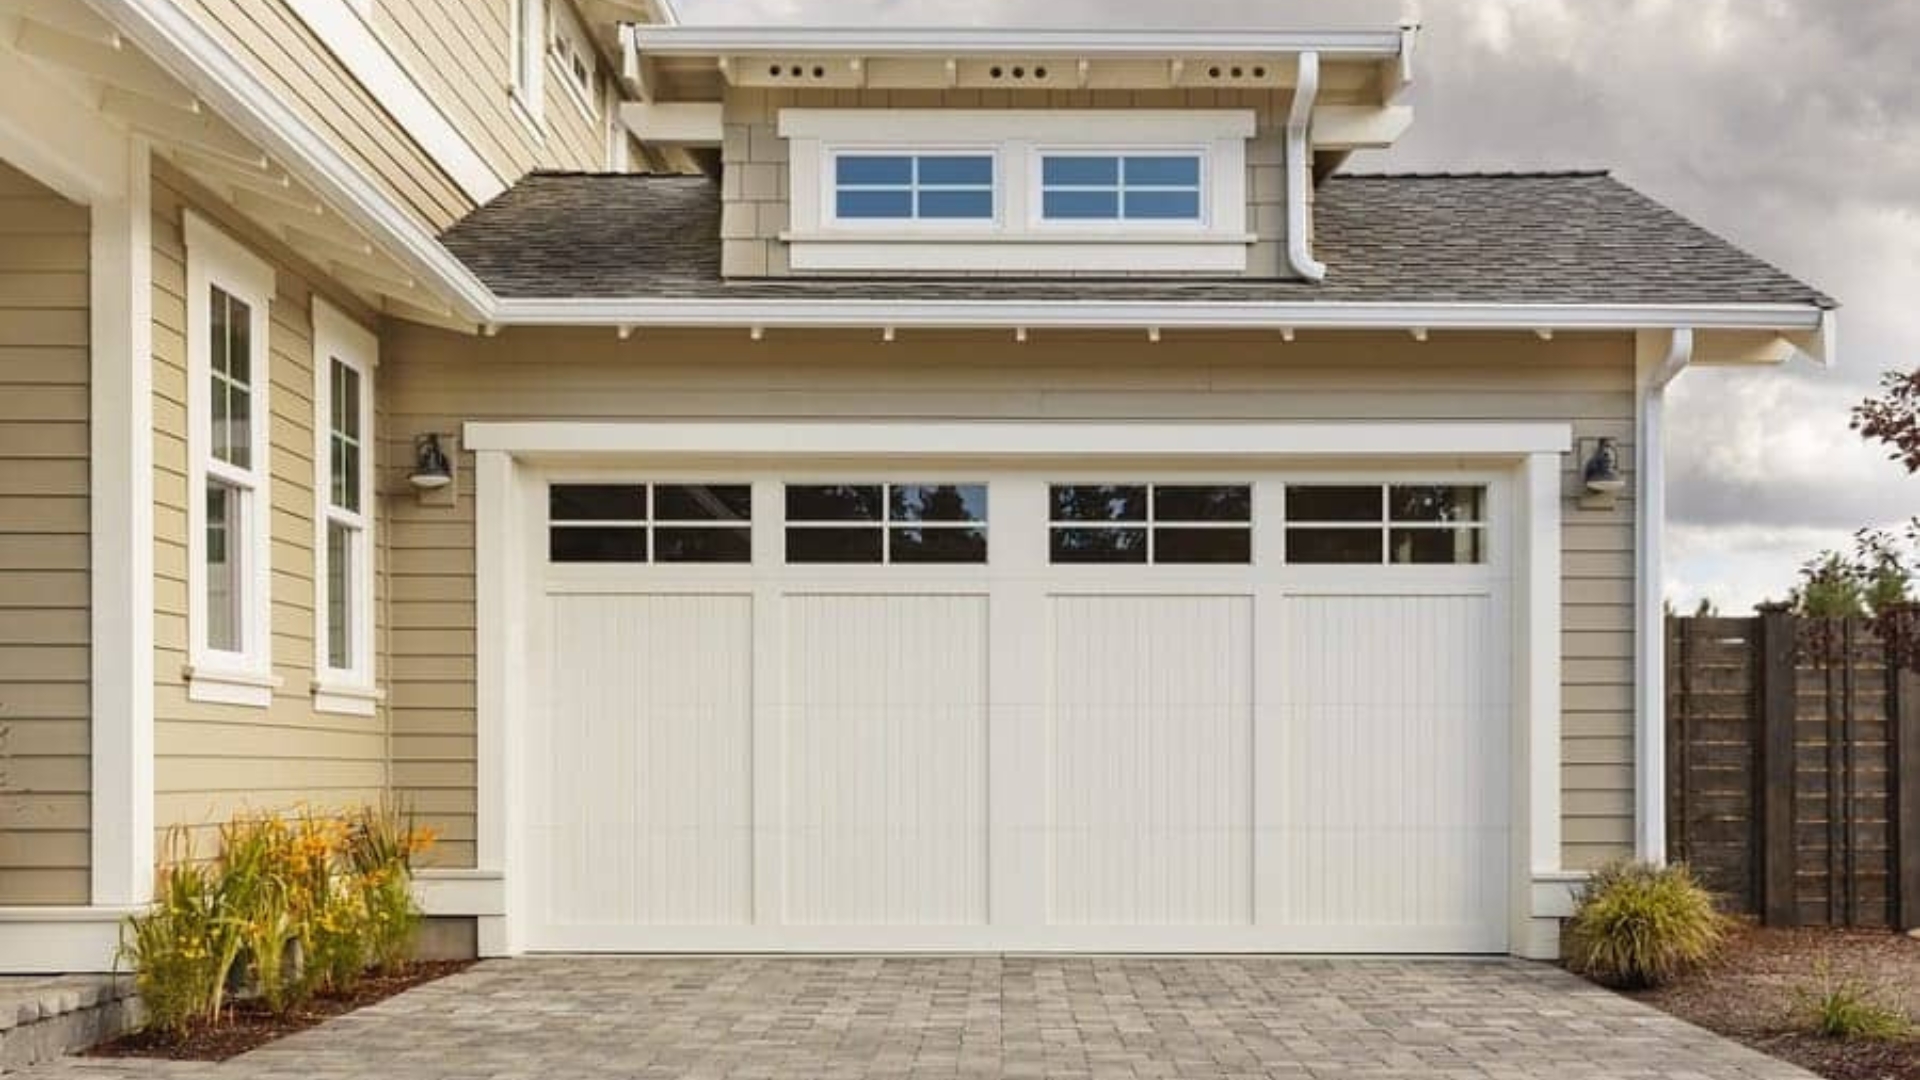 A house with big garage doors